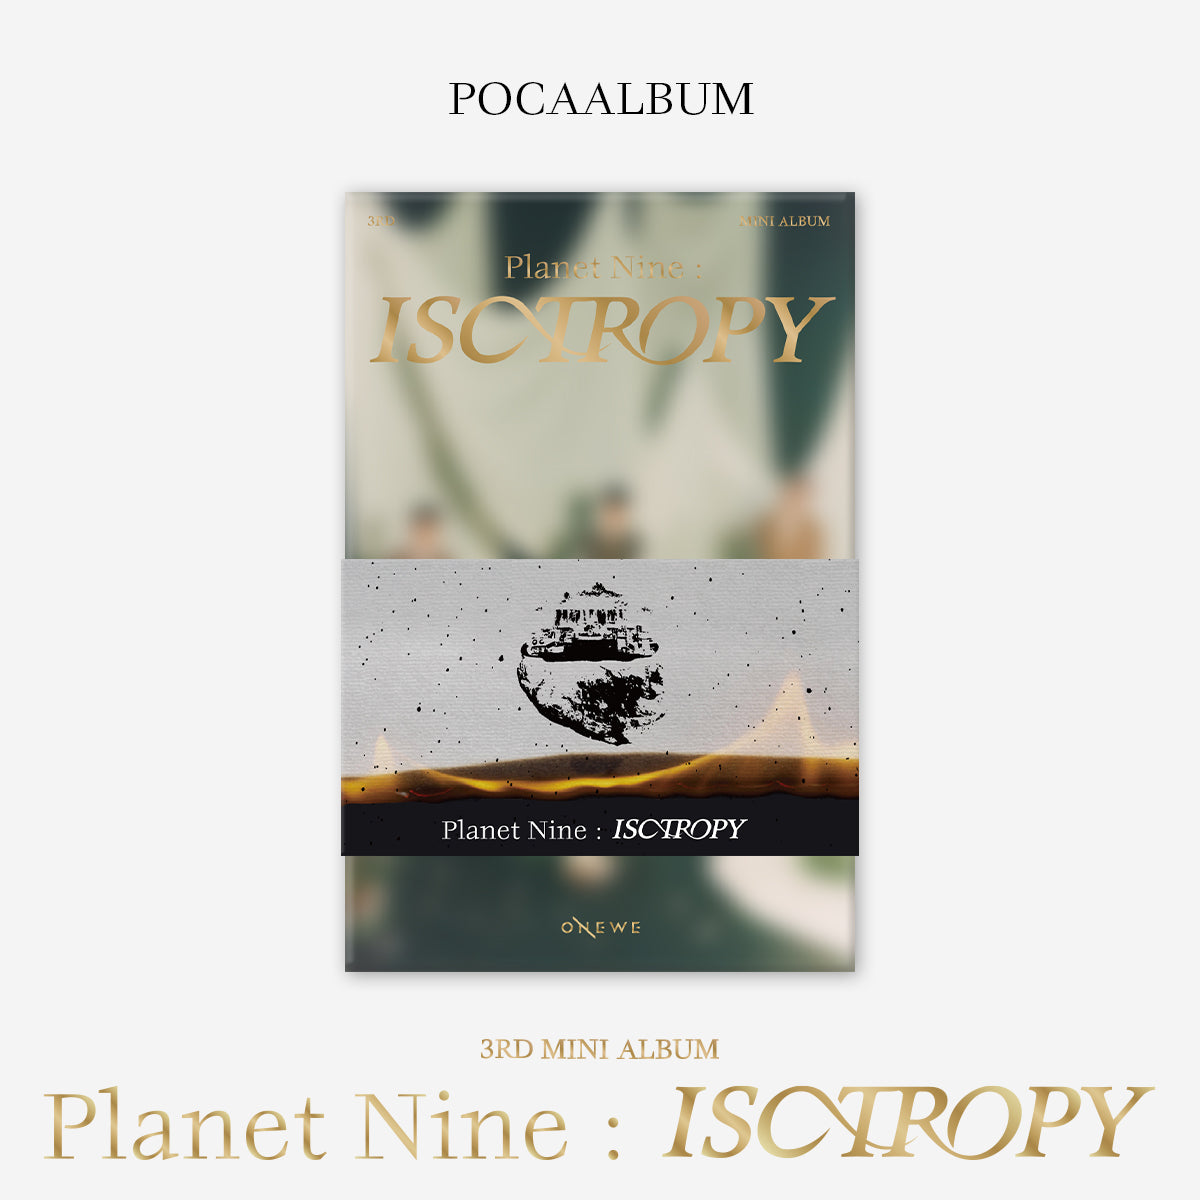 ONEWE - Planet Nine : ISOTROPY (POCAALBUM ver.)